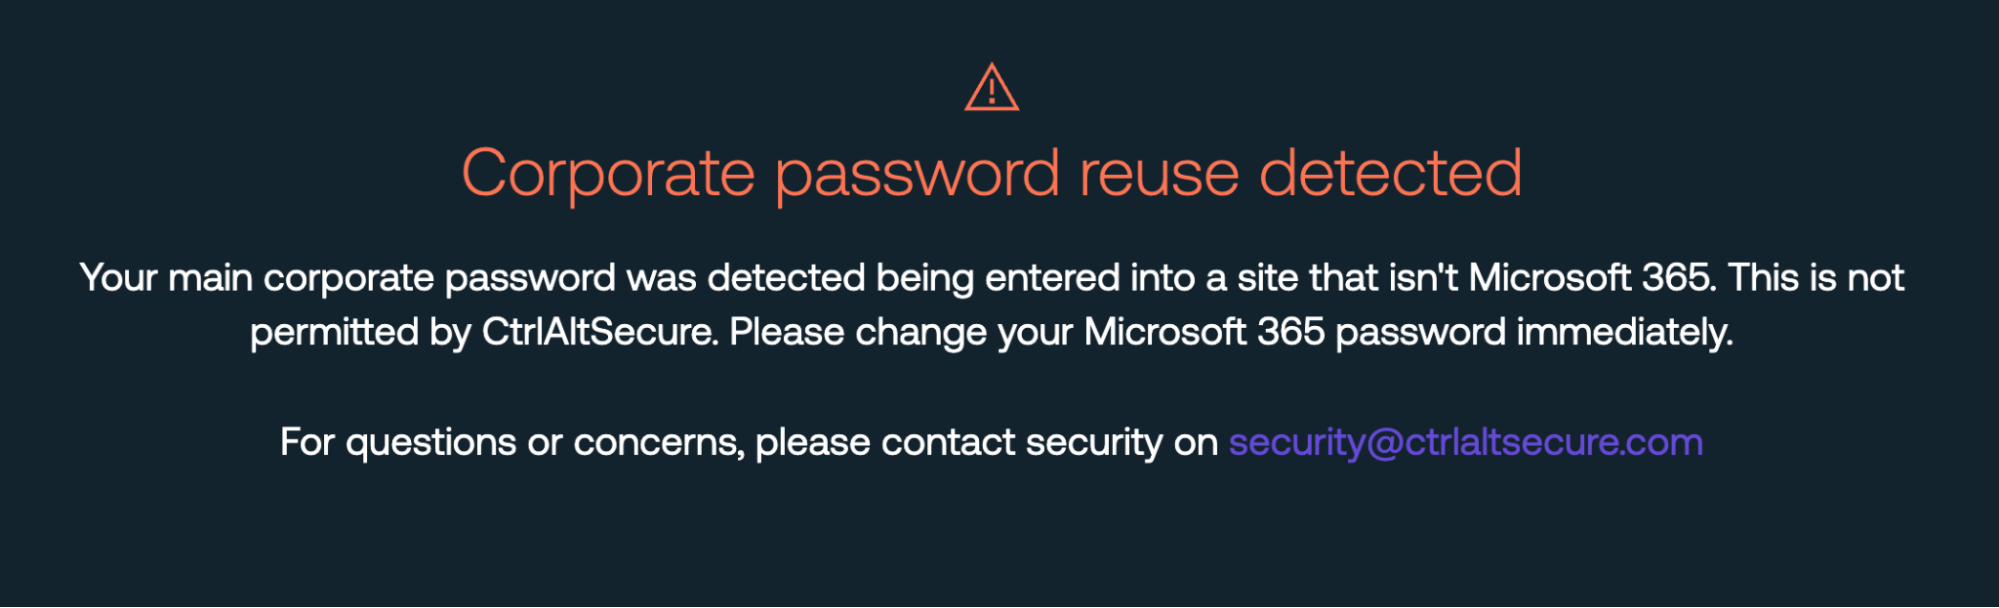 password reuse image 3